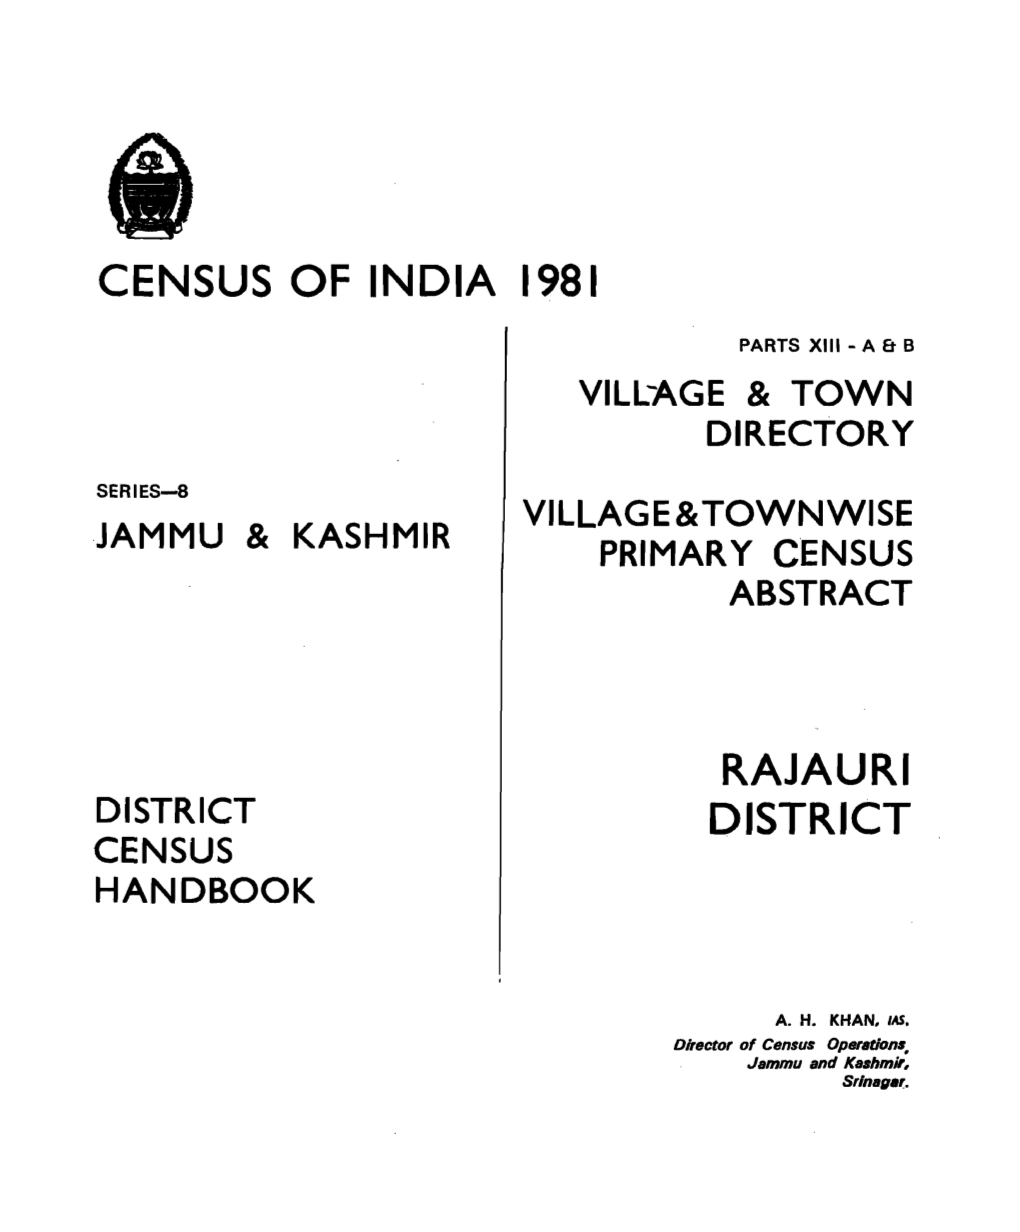 District Census Handbook, Rajauri, Part XIII-A & B, Series-8